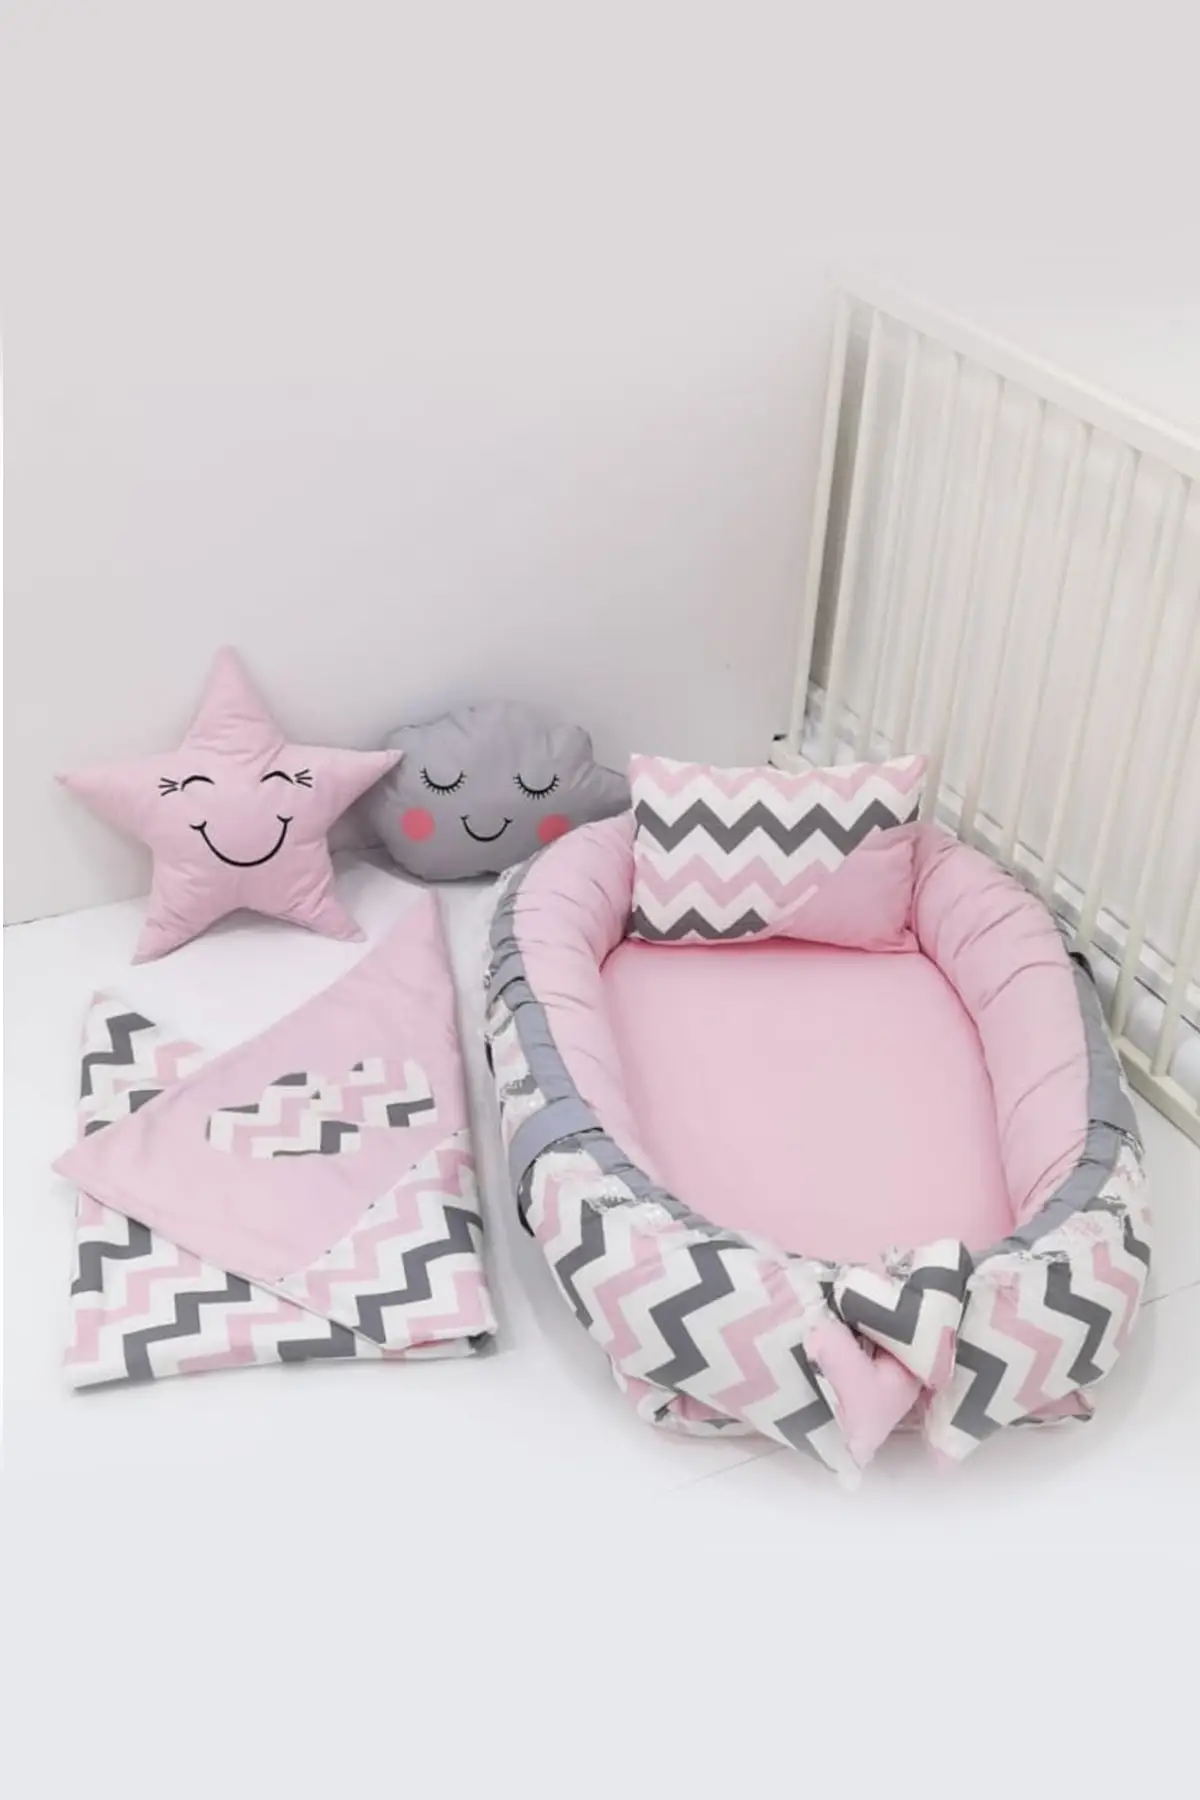 Babynest Zigzag Pattern Mother Yanı Baby Bedding Blanket, Pillow 5 of Suit, pink Park Bed & Playpen Child